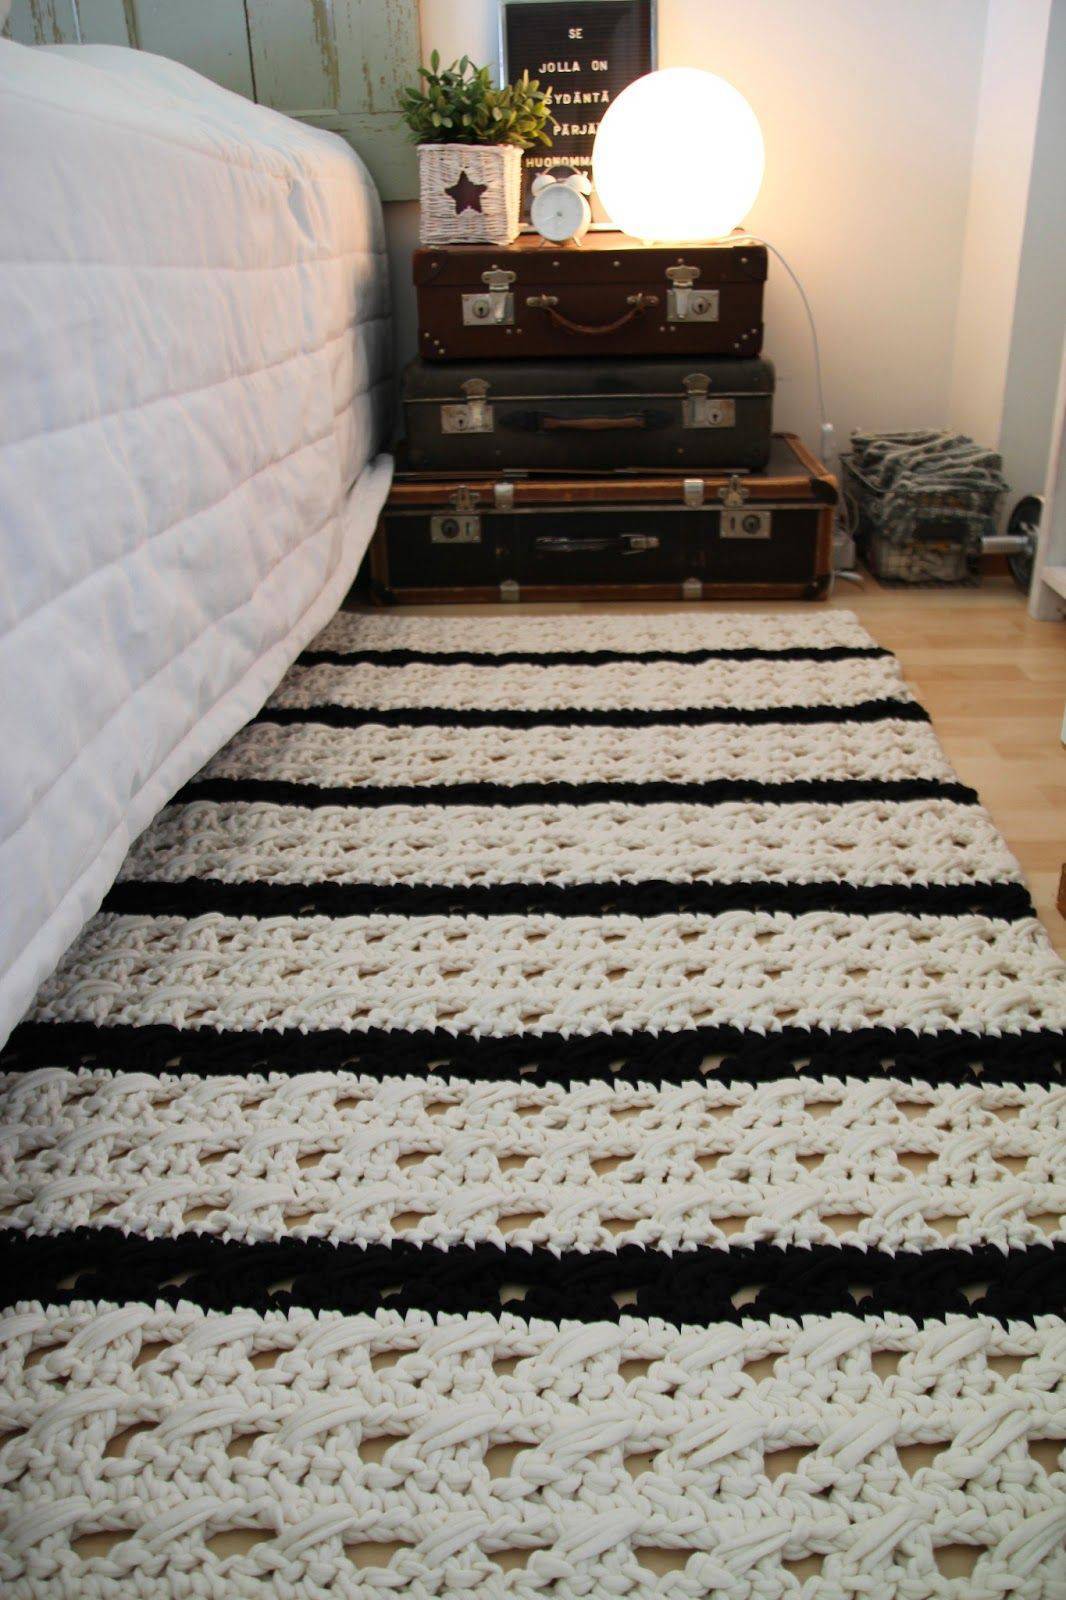 tapete de barbante croche no quarto ambiente decorado lista preta e branca